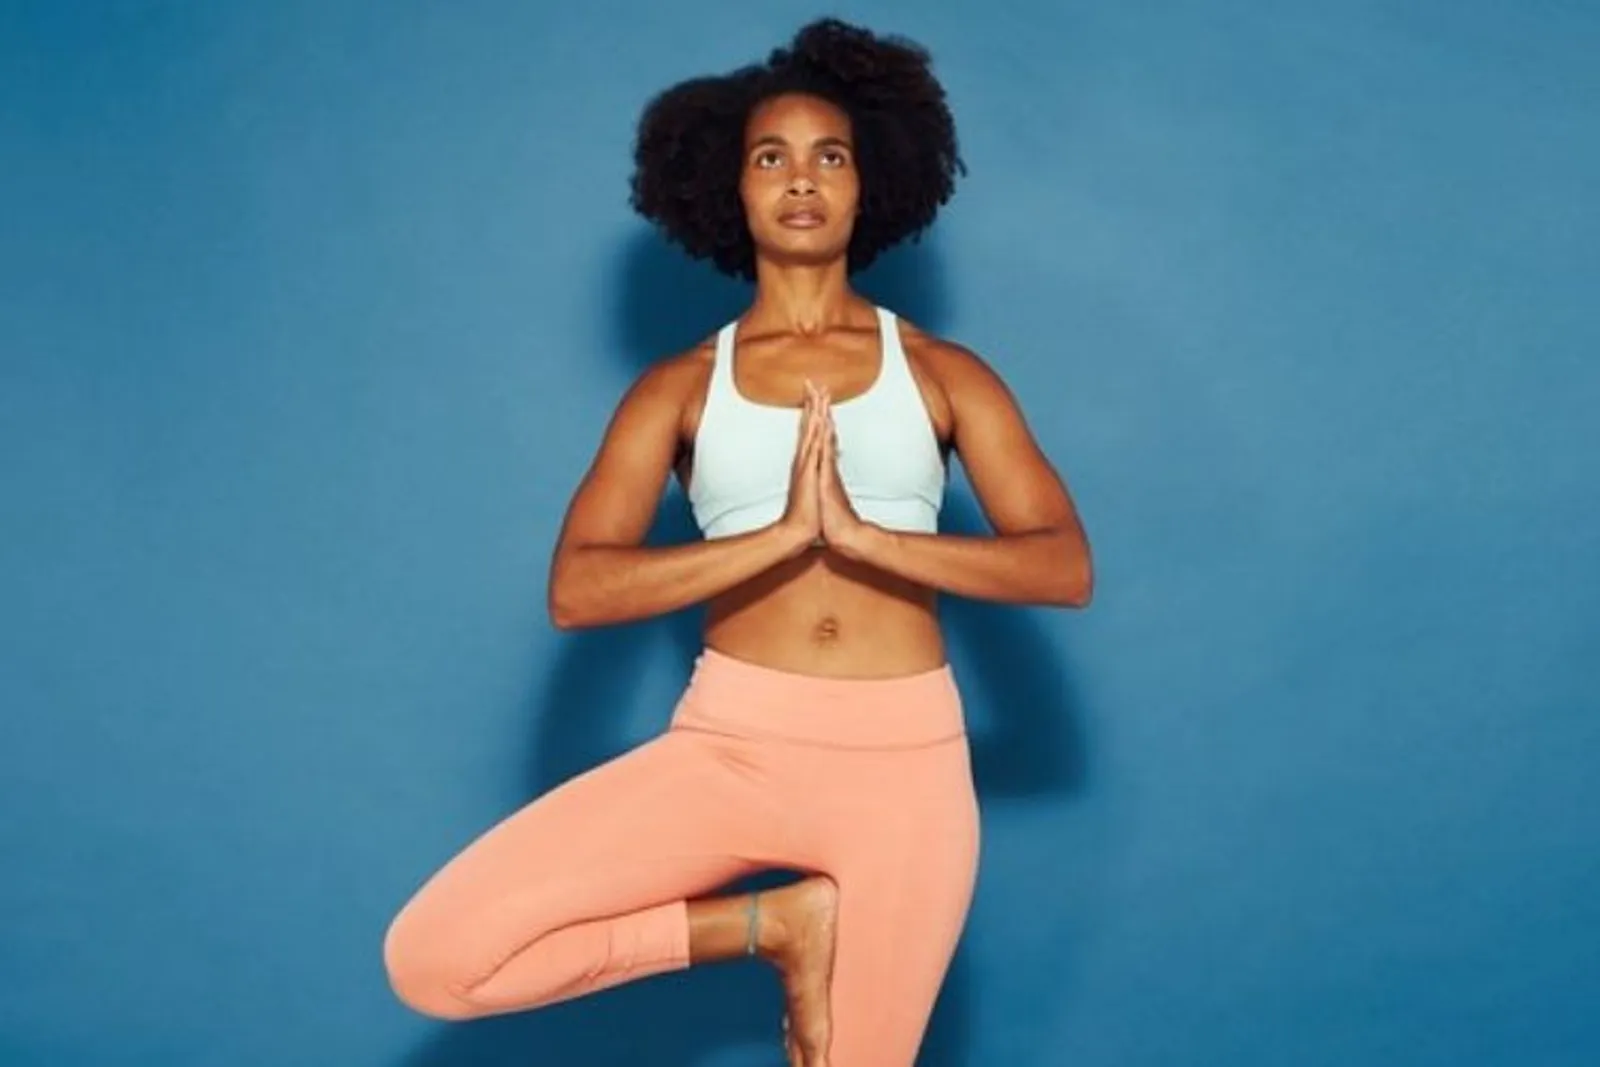 Mudah Dilakukan, Inilah 5 Gerakan Yoga untuk Kamu yang Pemula